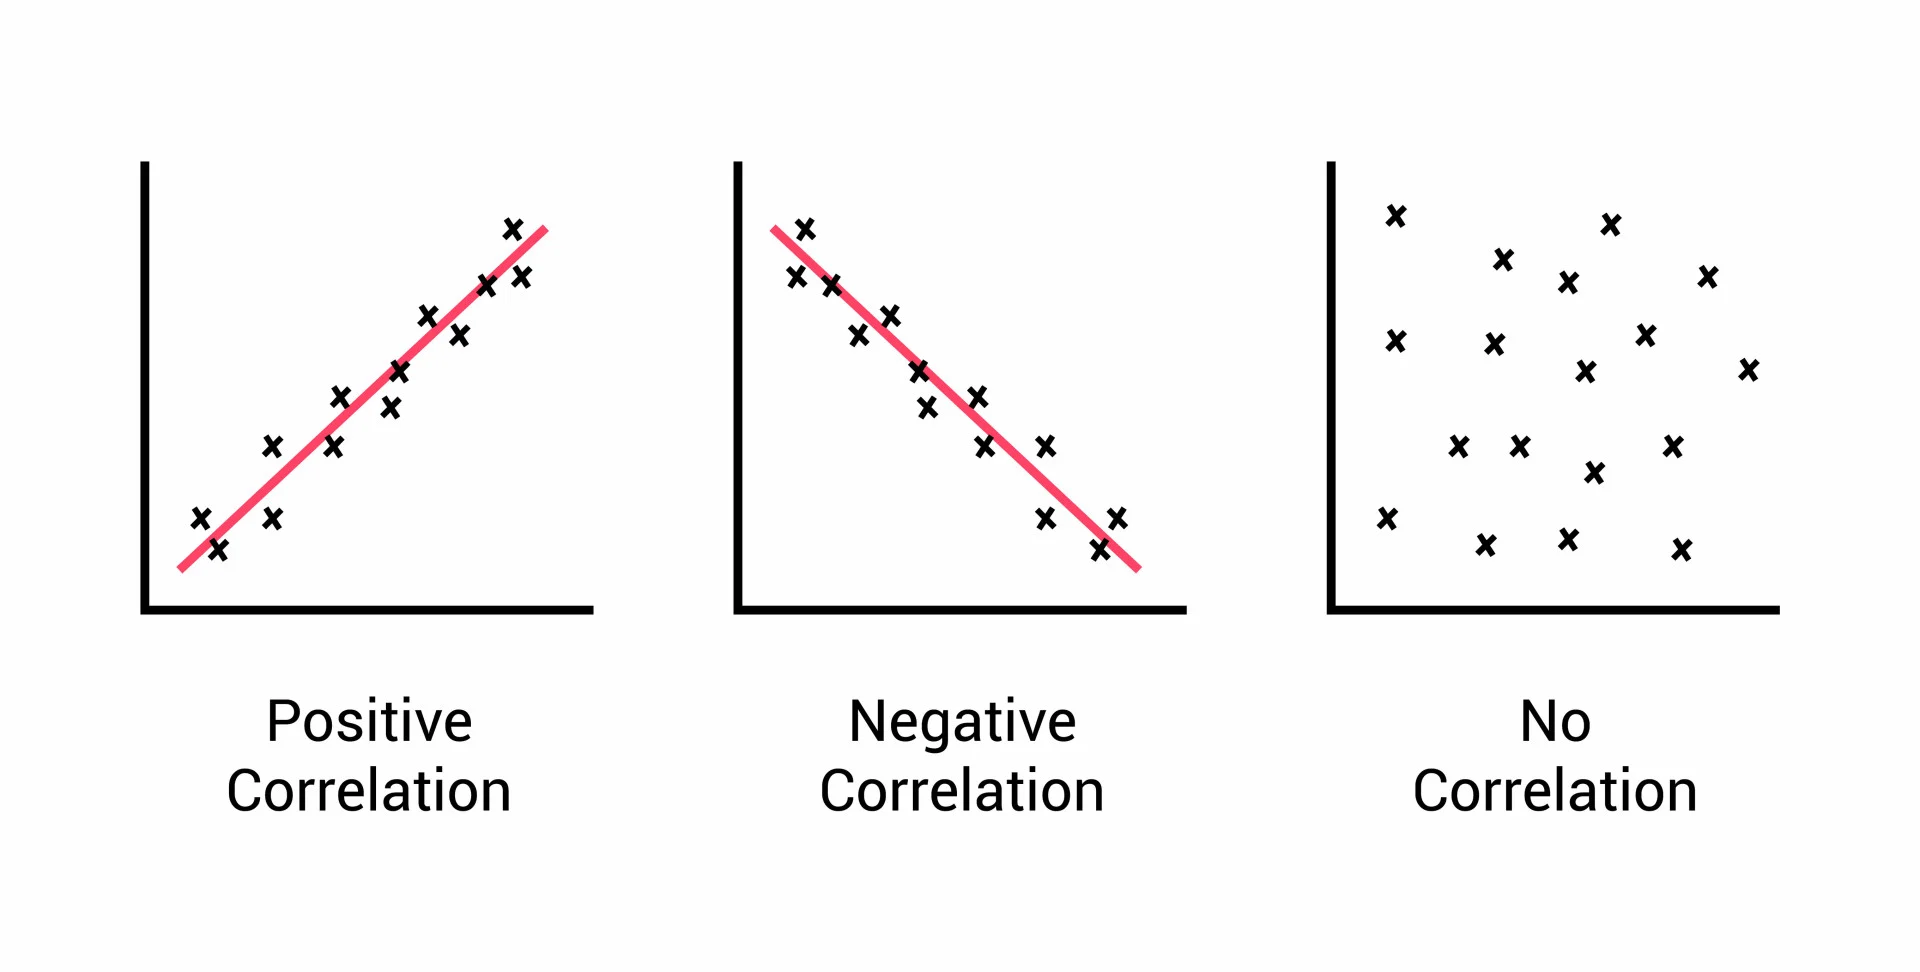 Correlation analysis